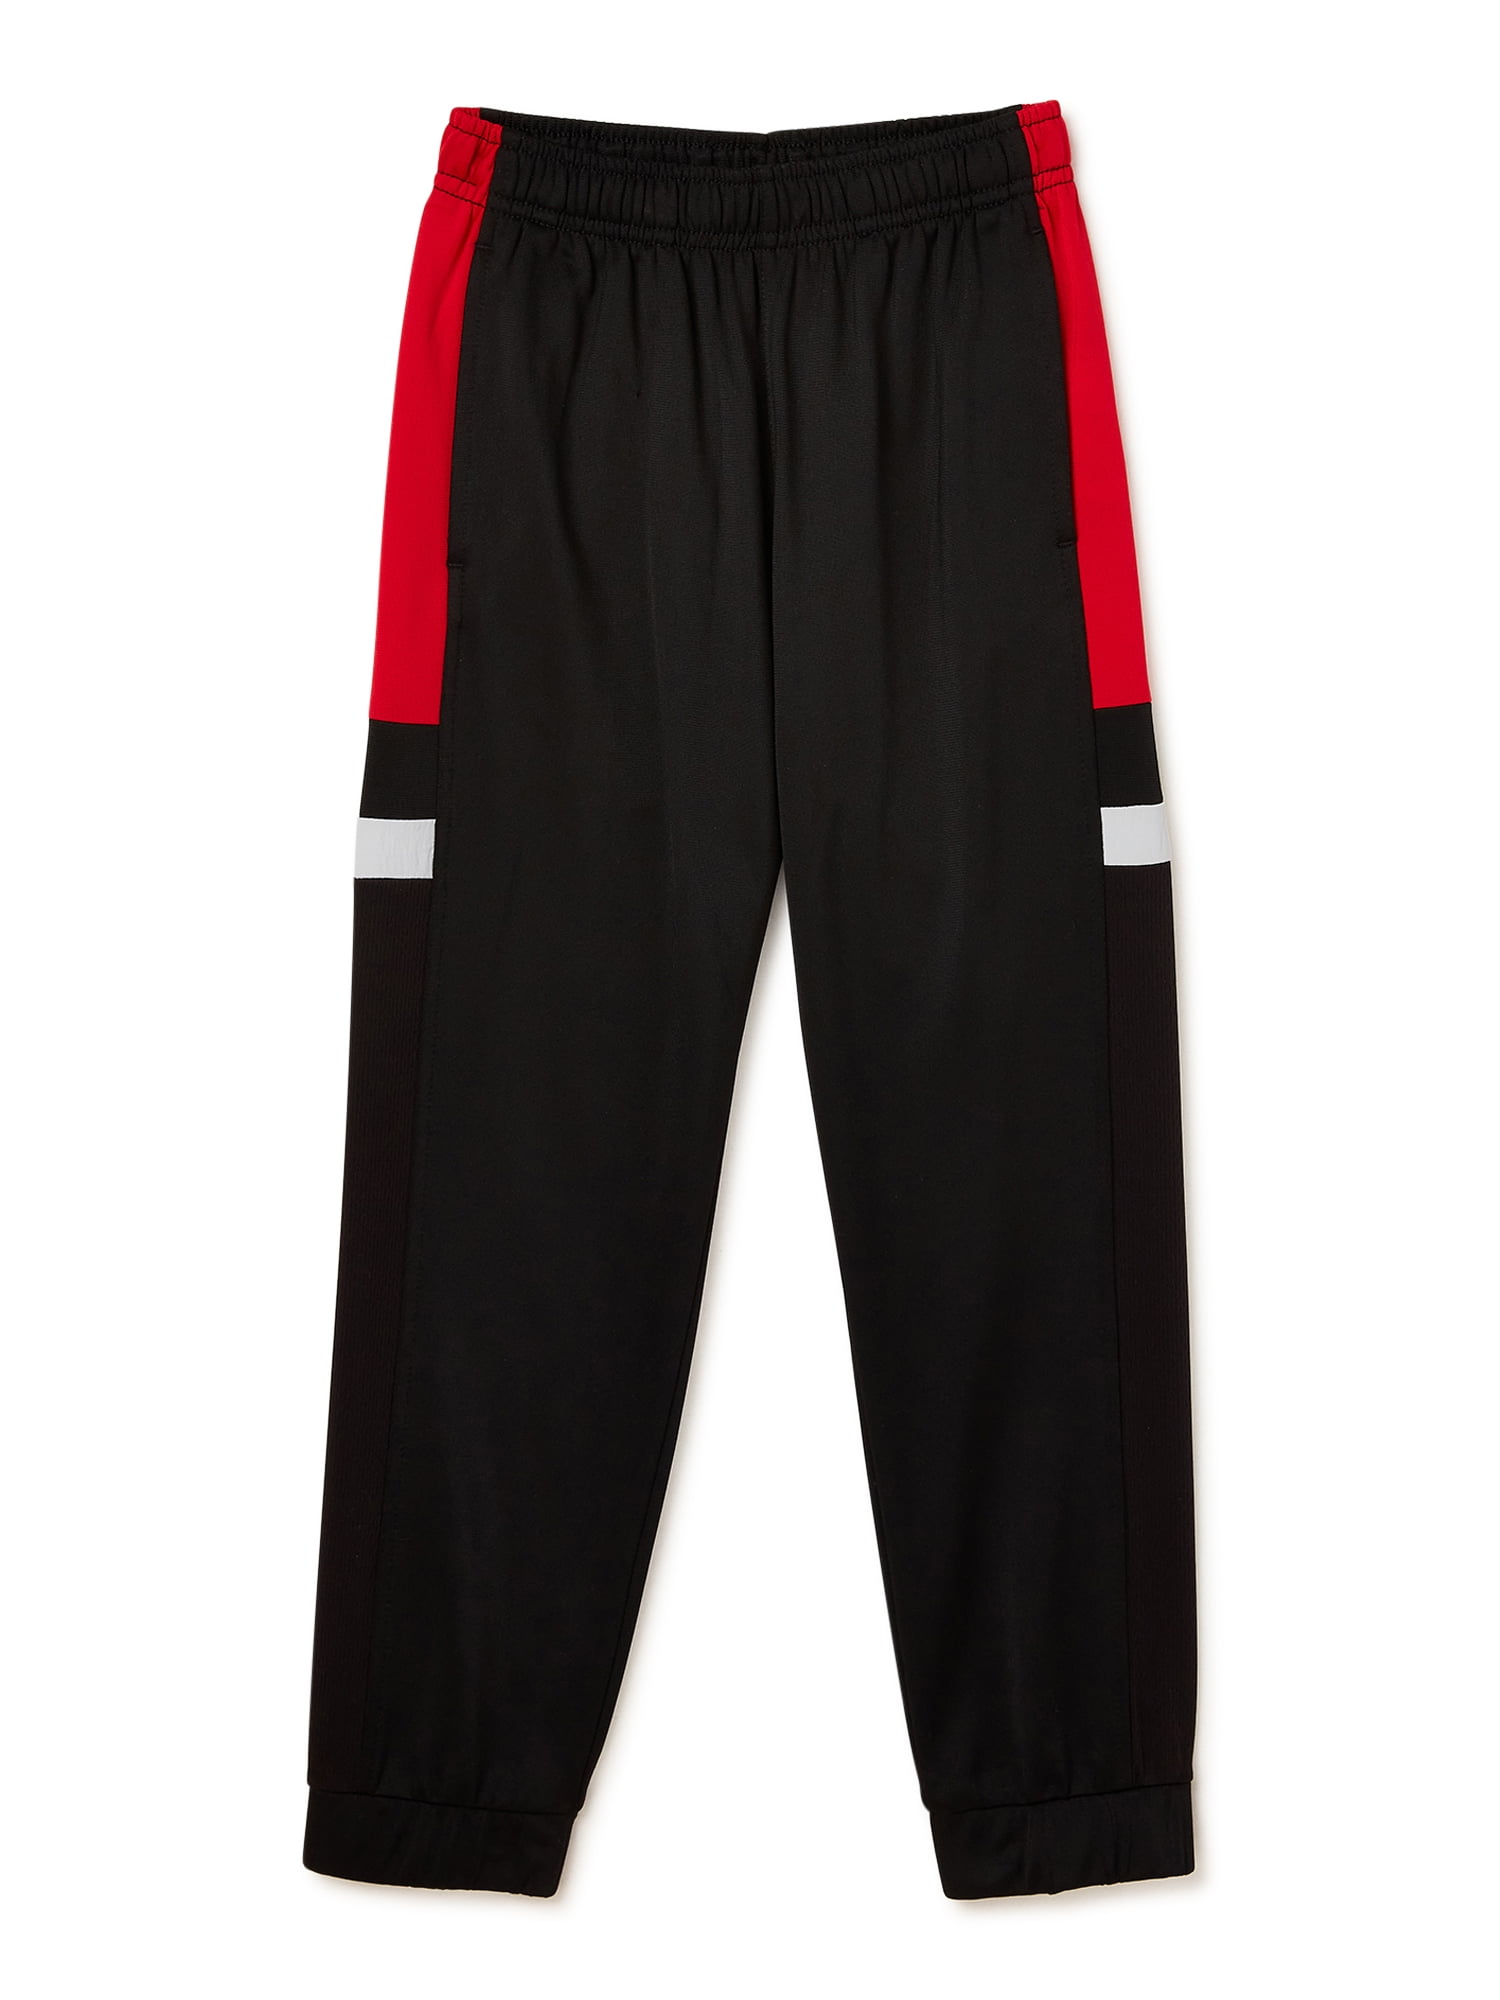 Athletic Works Boys Tricot Pants, Sizes 4-18 & Husky – Deal – BrickSeek